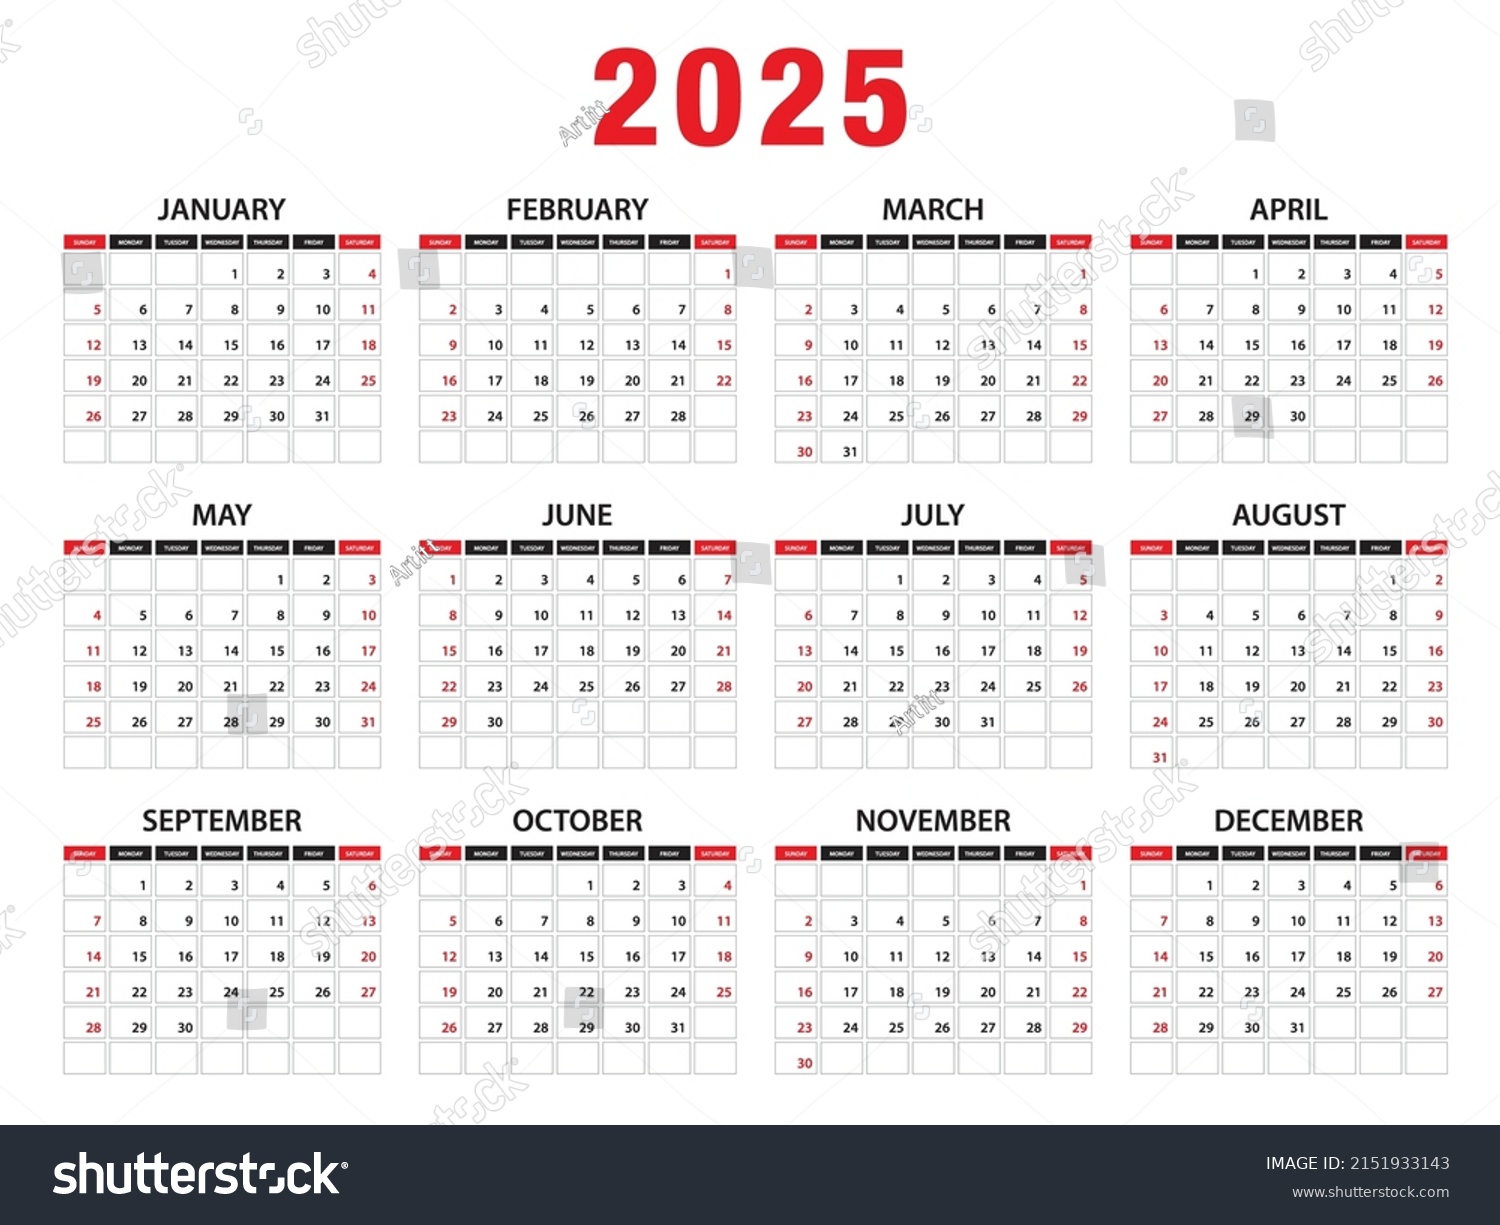 2025-calendar-year-vector-illustration-week-stock-vector-royalty-free-2151933143-shutterstock